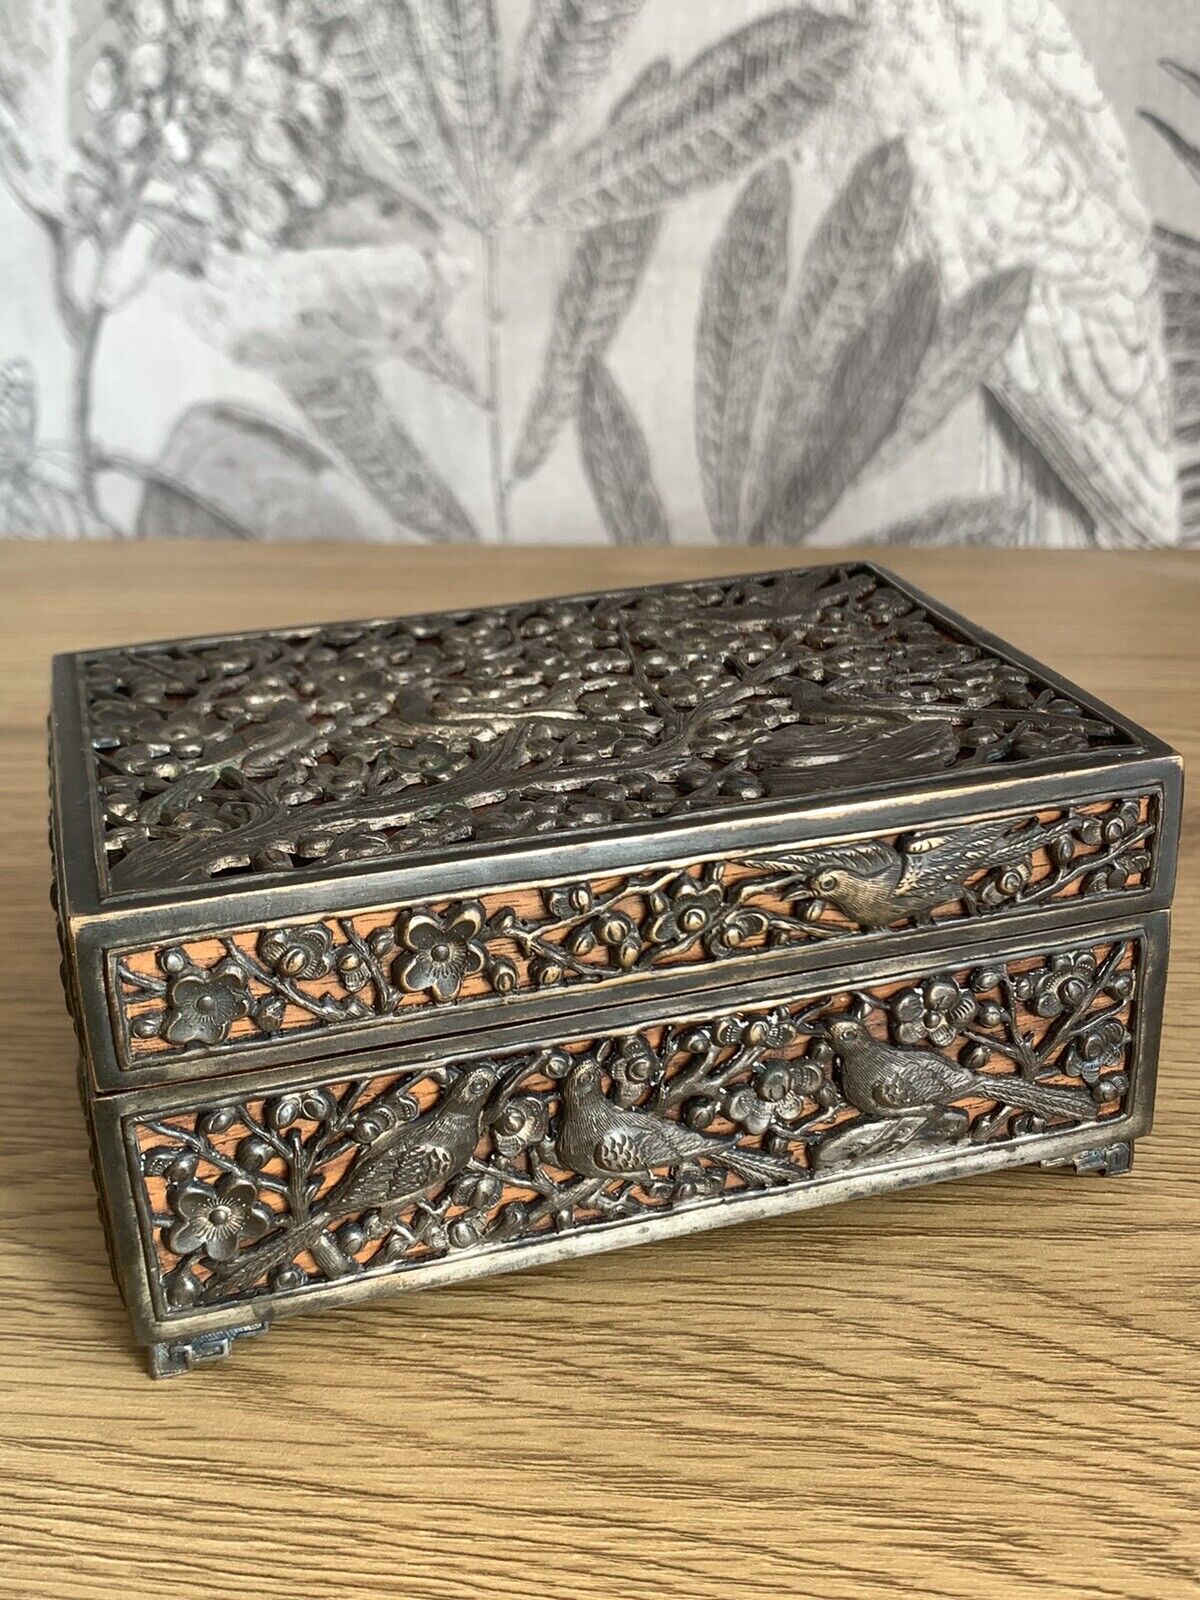 Rare Antique Mahogany Jewelry Box With Fine Raised Metal Patterns